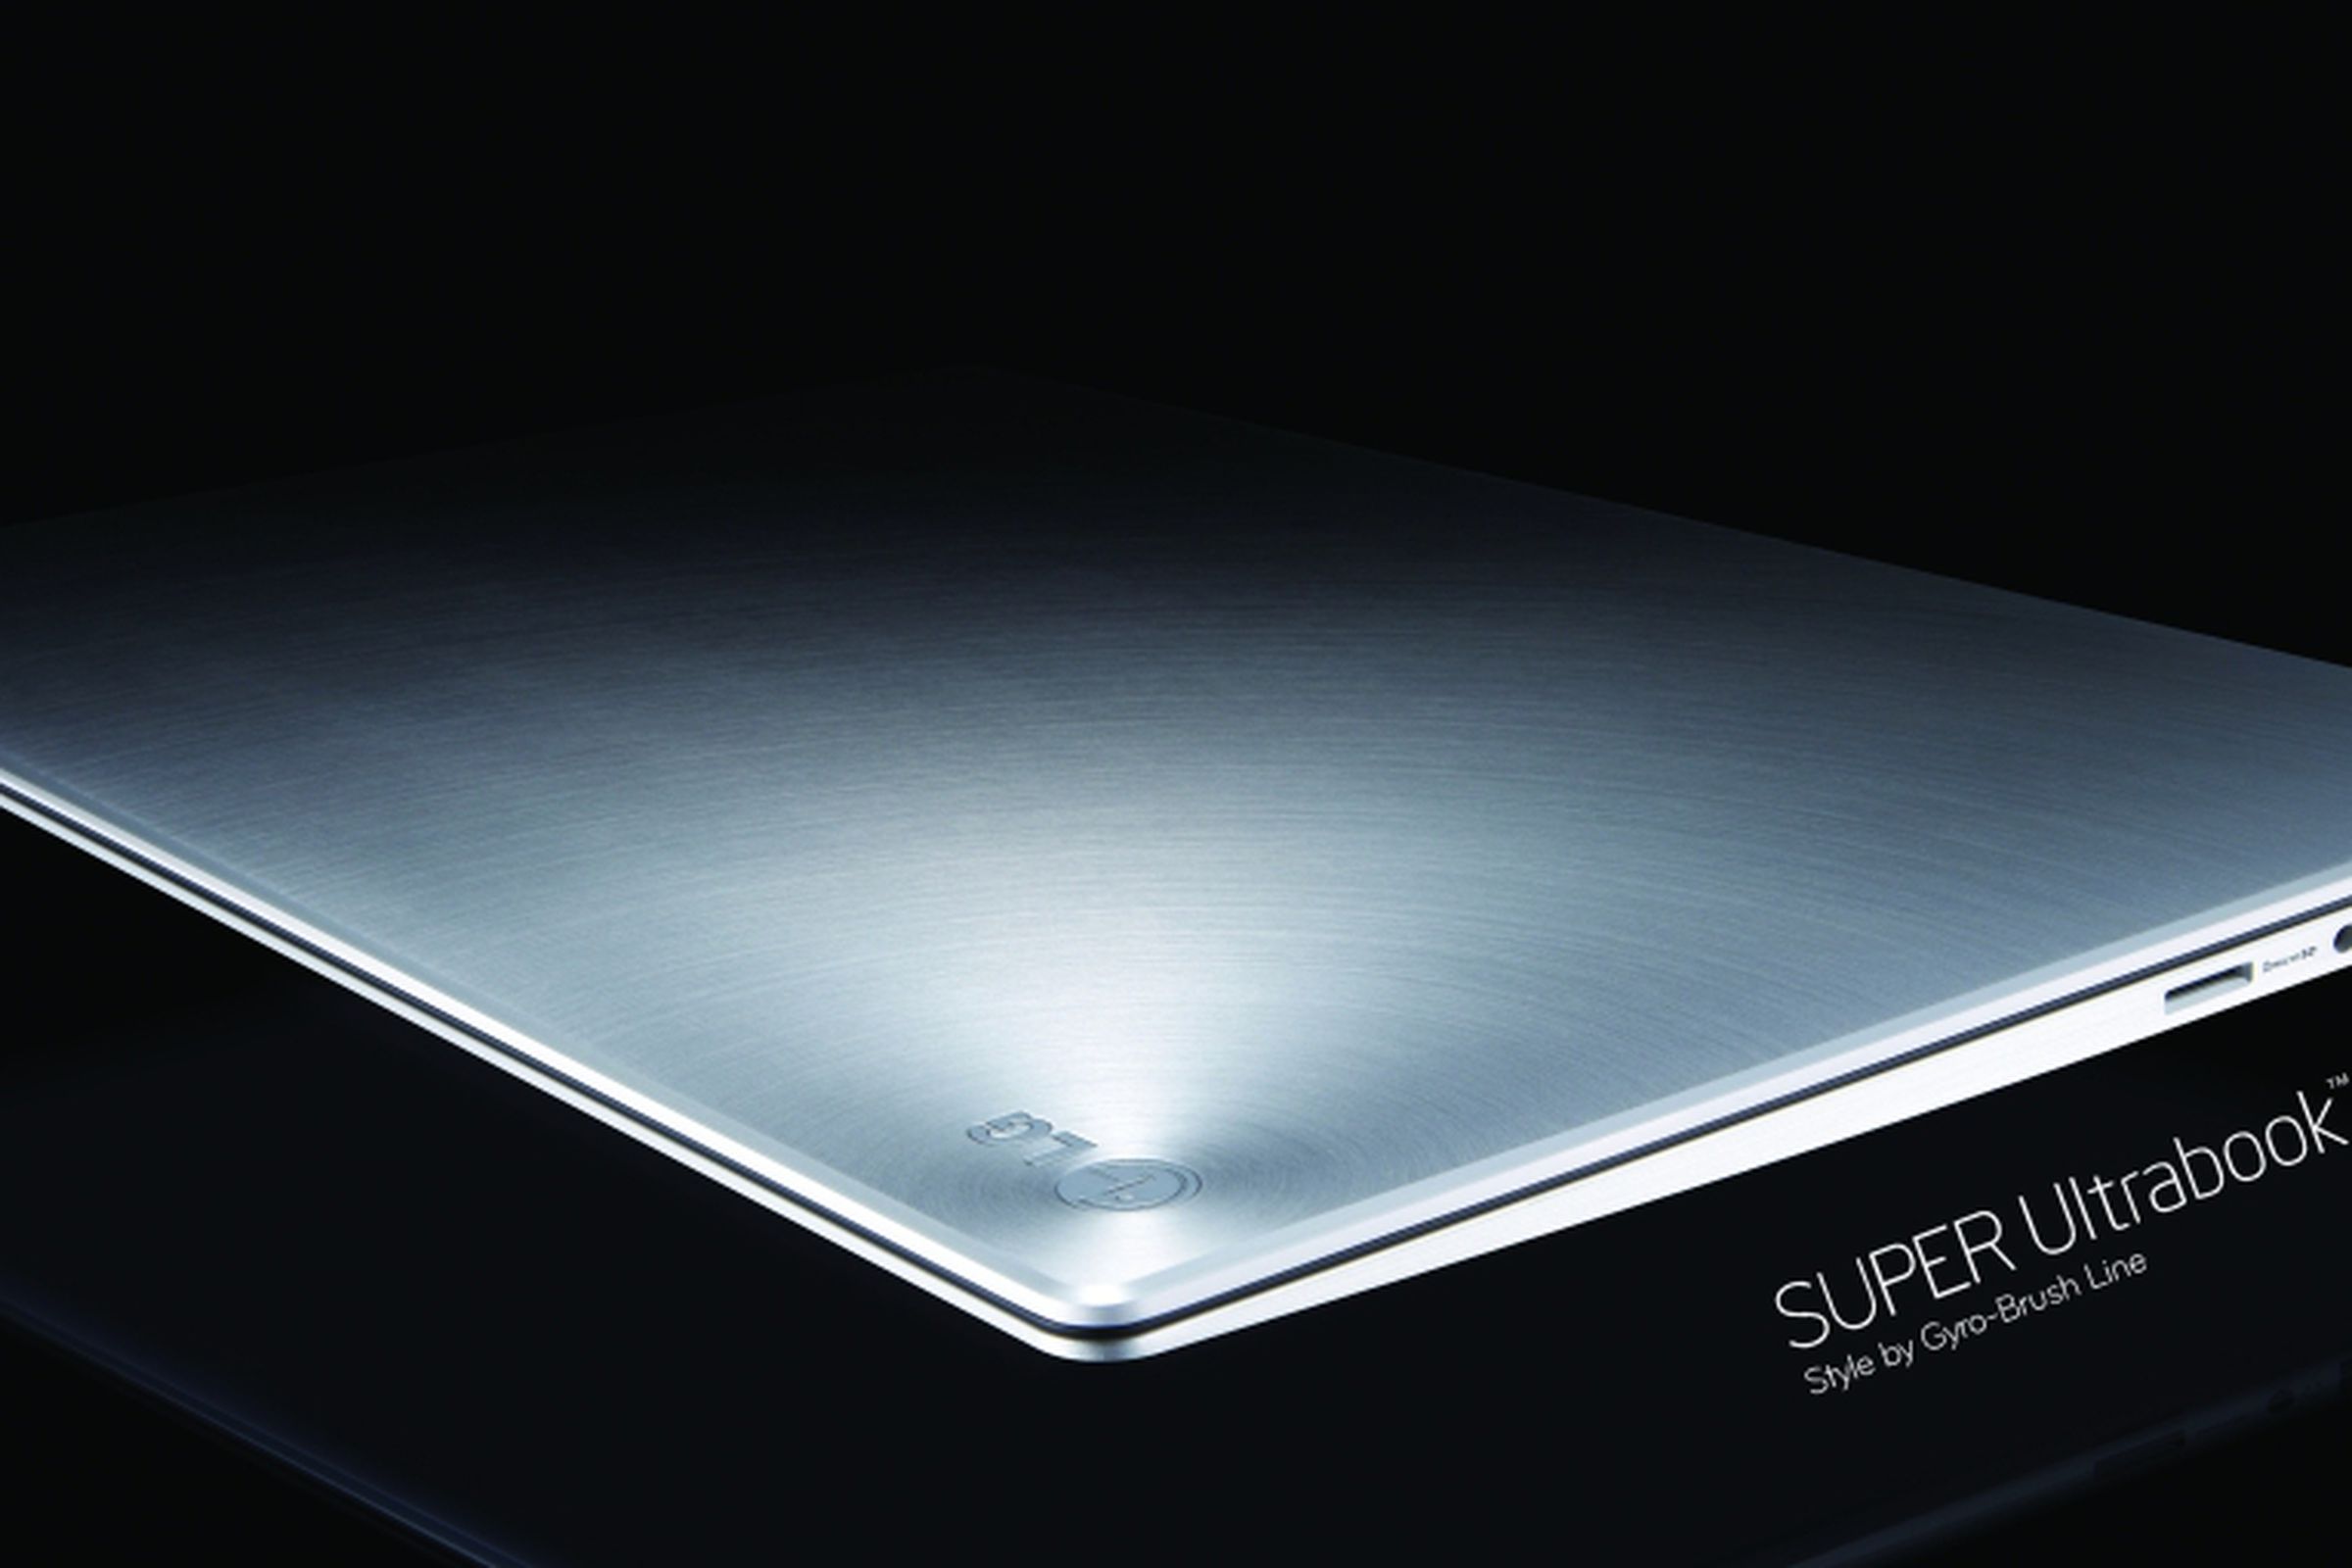 LG Super Ultrabook